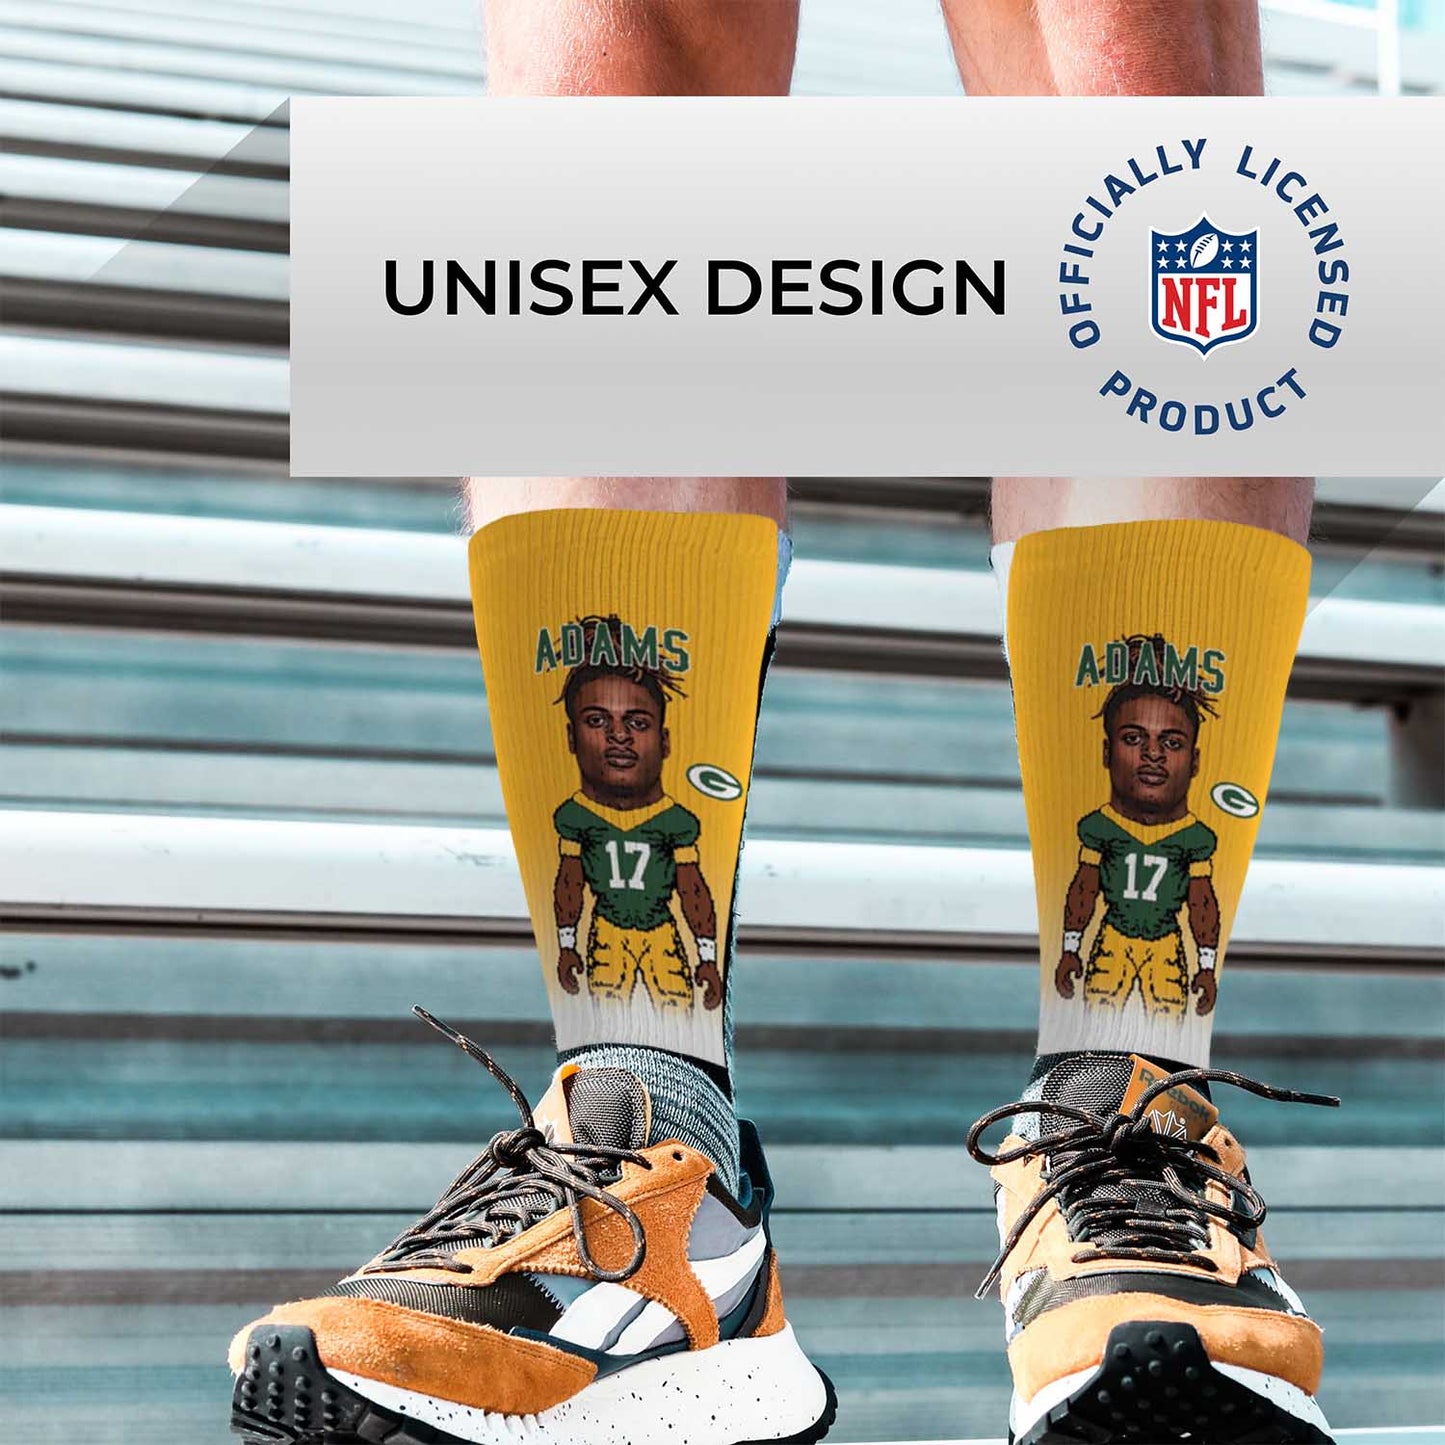 Green Bay Packers FBF NFL V Curve Socks - Gold #17